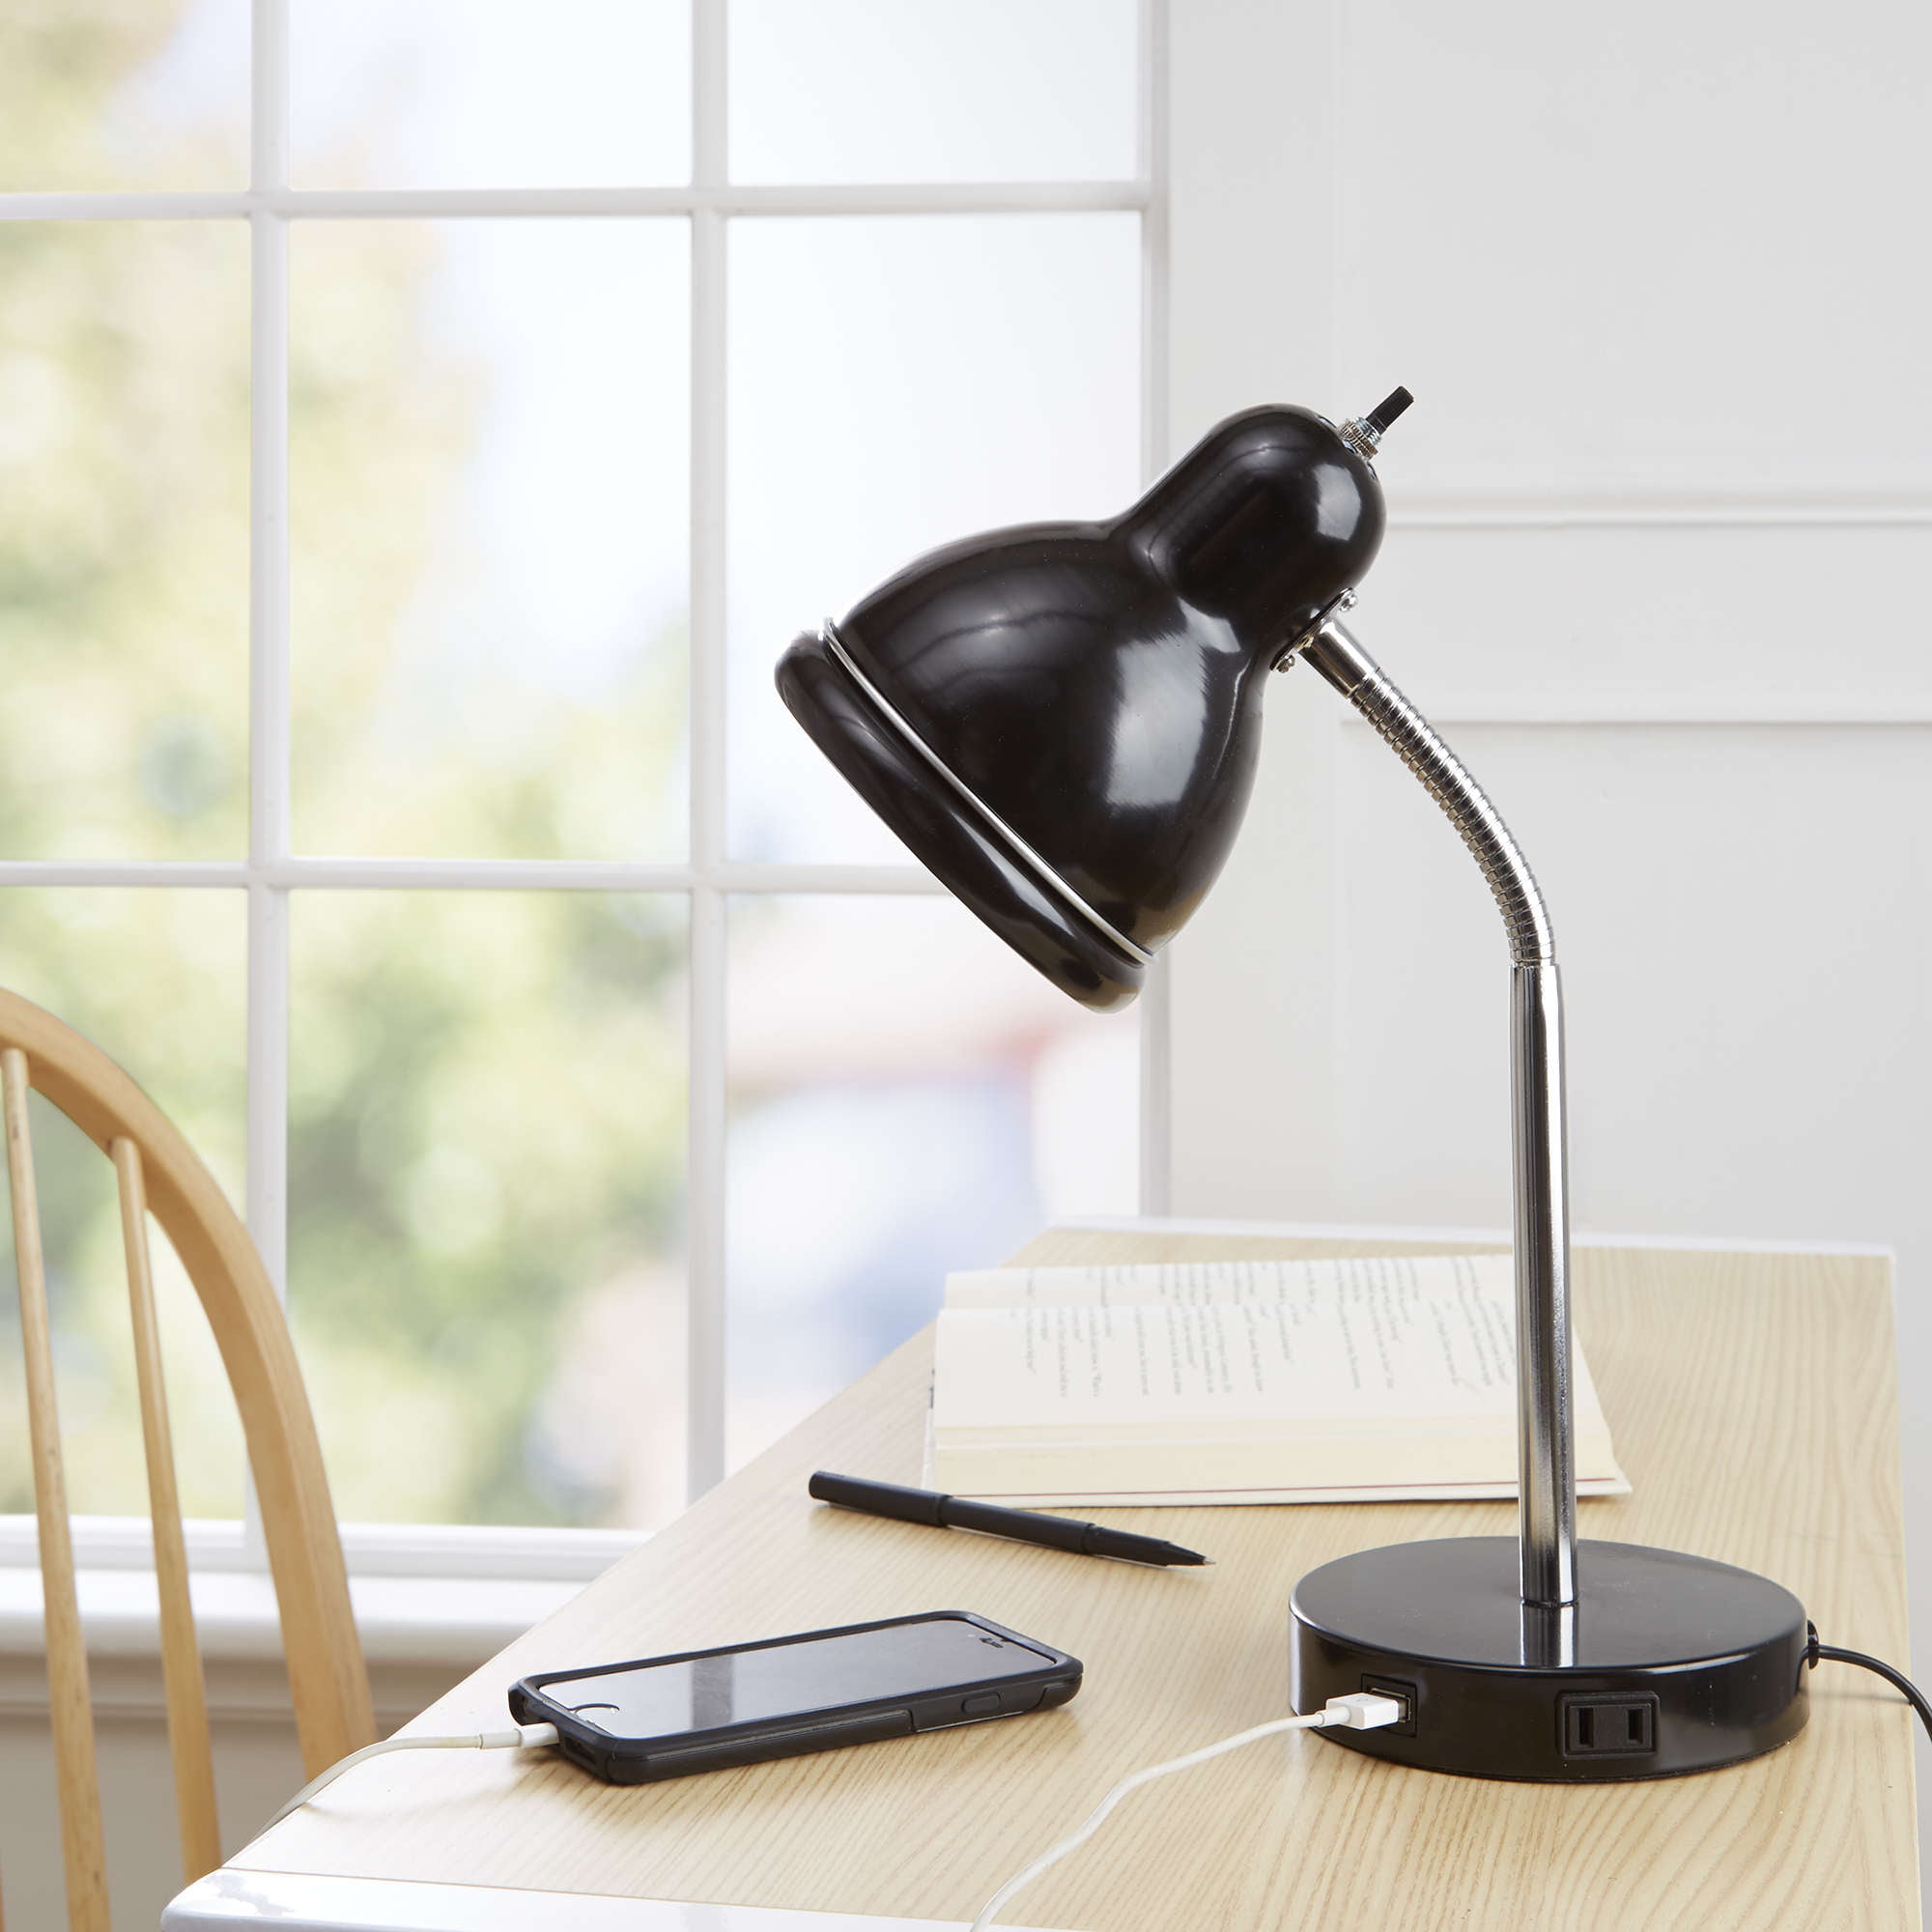 Mainstays USB Desk Lamp, Black Finish with Chrome Gooseneck - Walmart